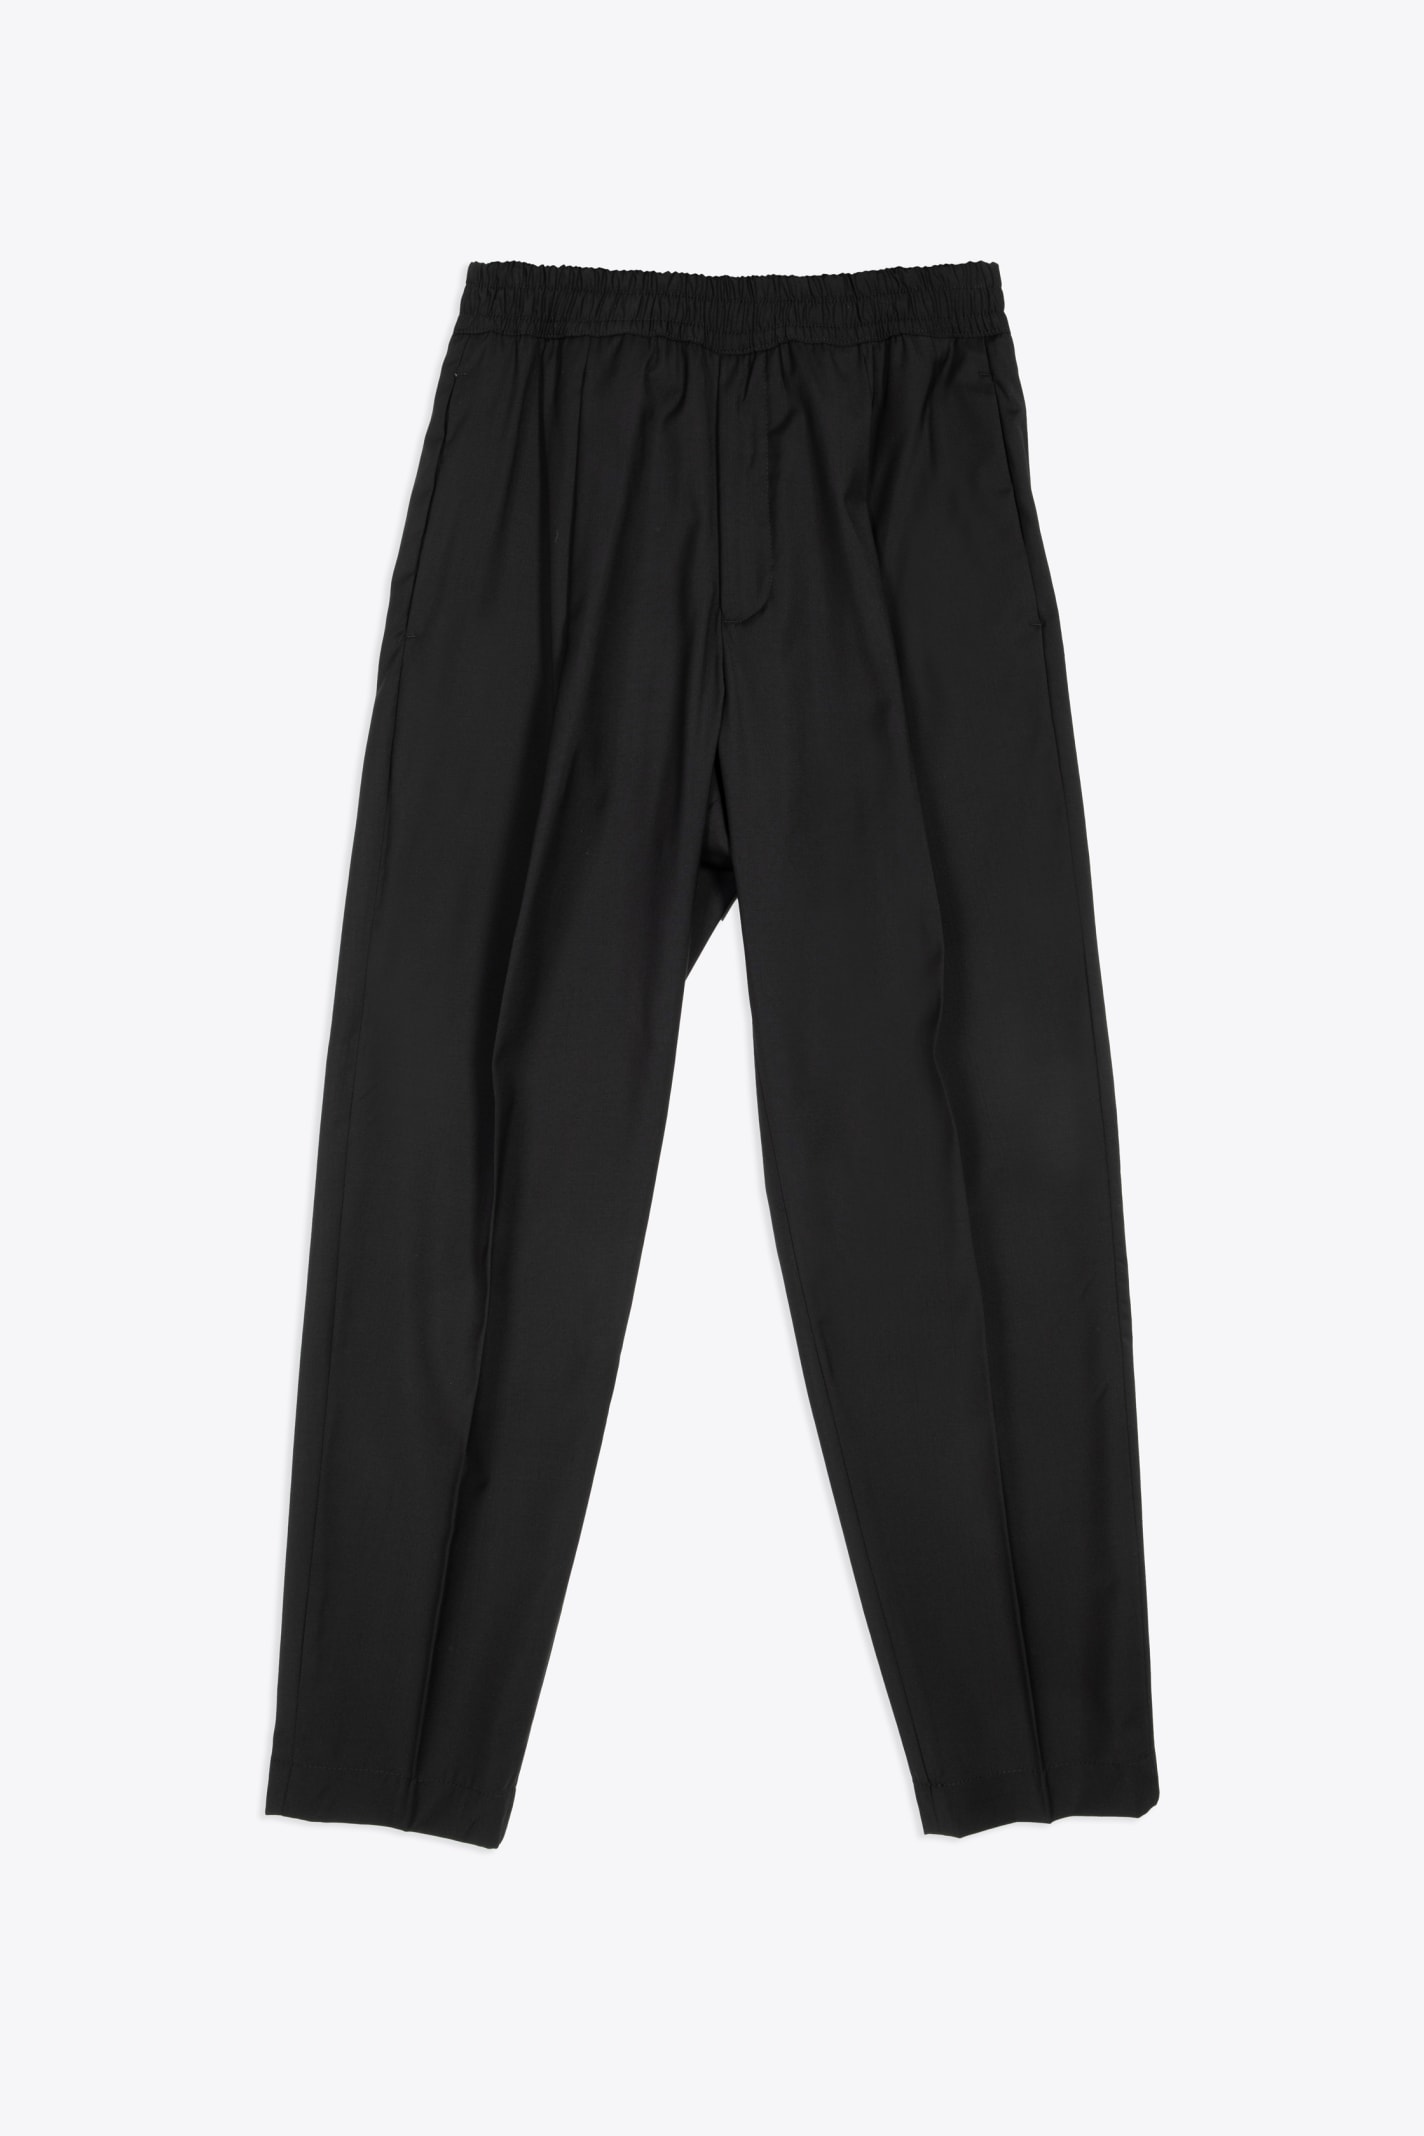 Pantalone Black wool tailored pant with elastic waistband - Savoys